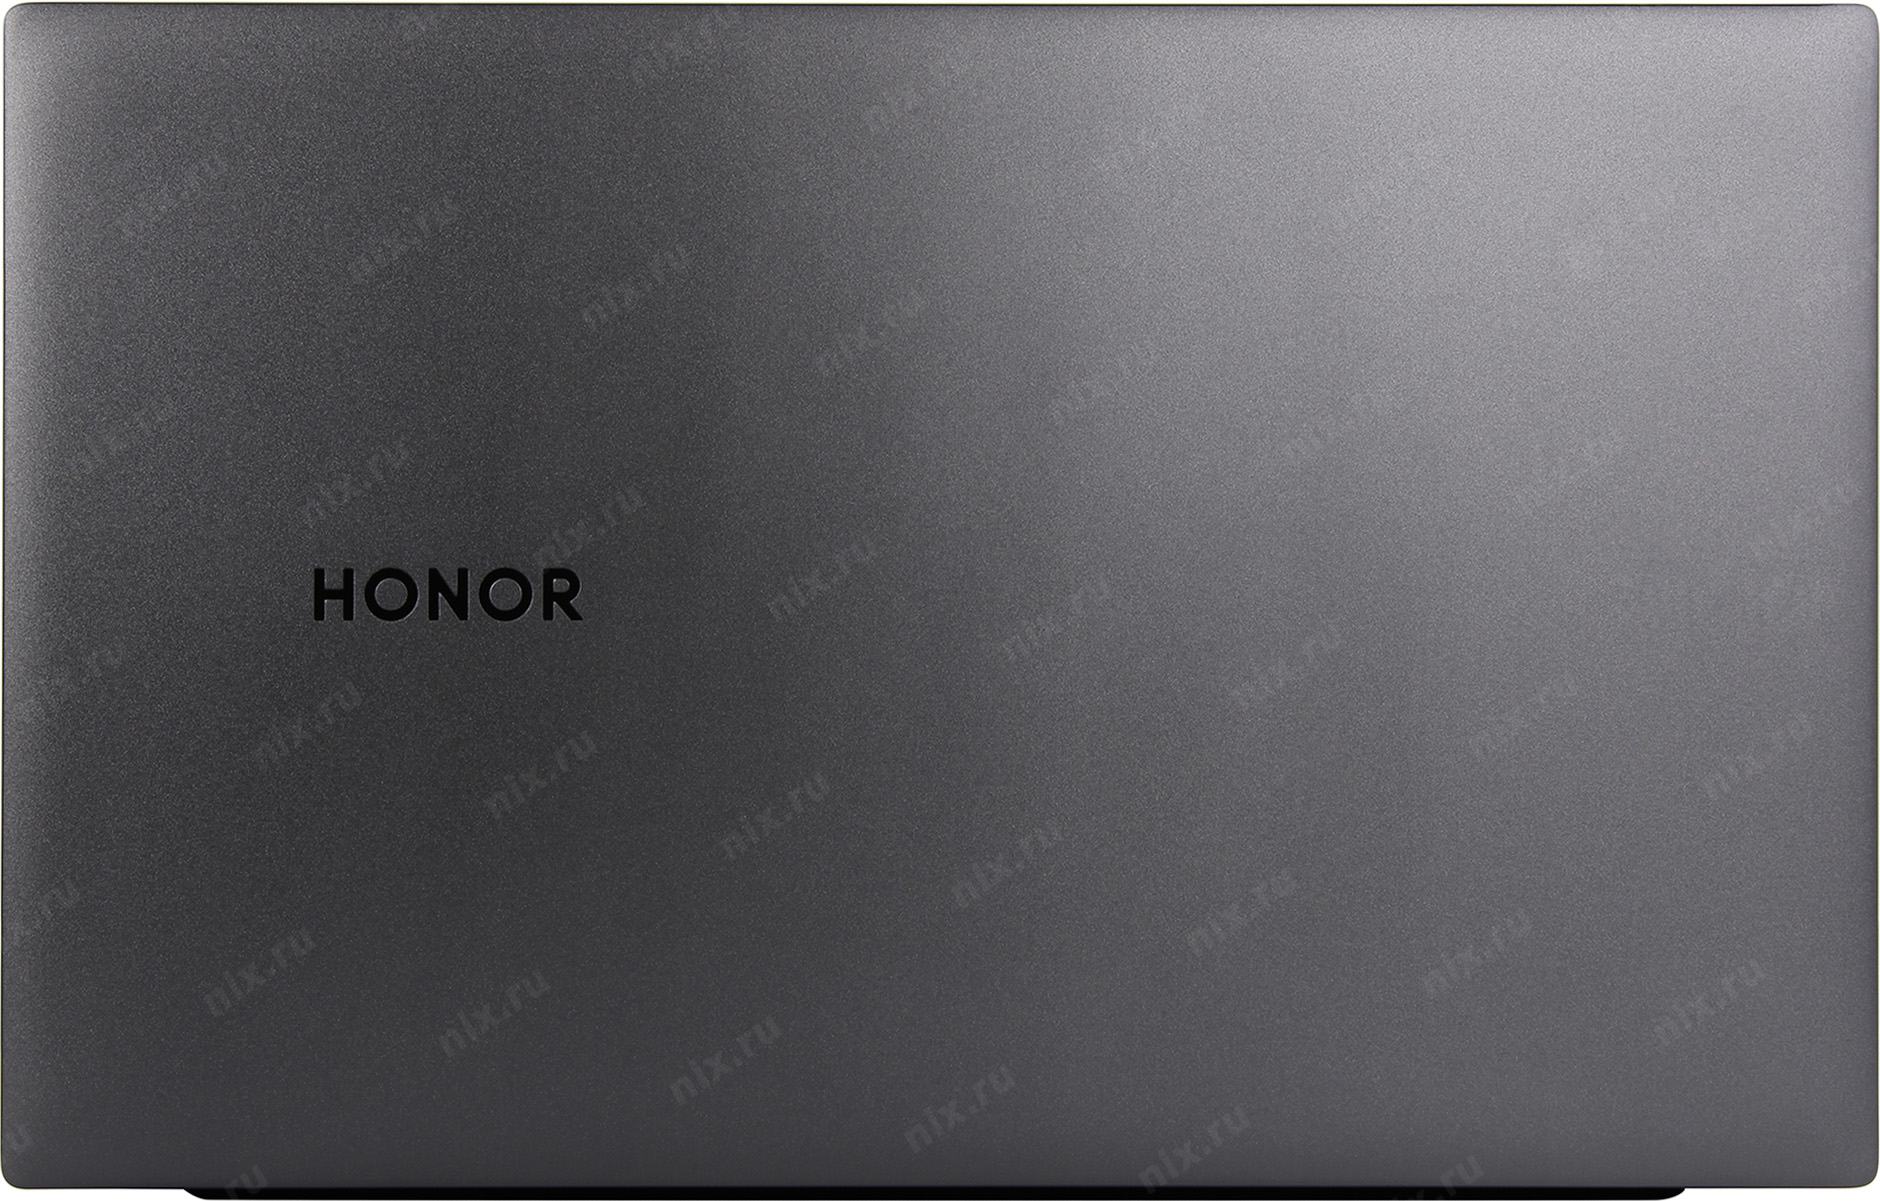 Honor magicbook pro wfq9